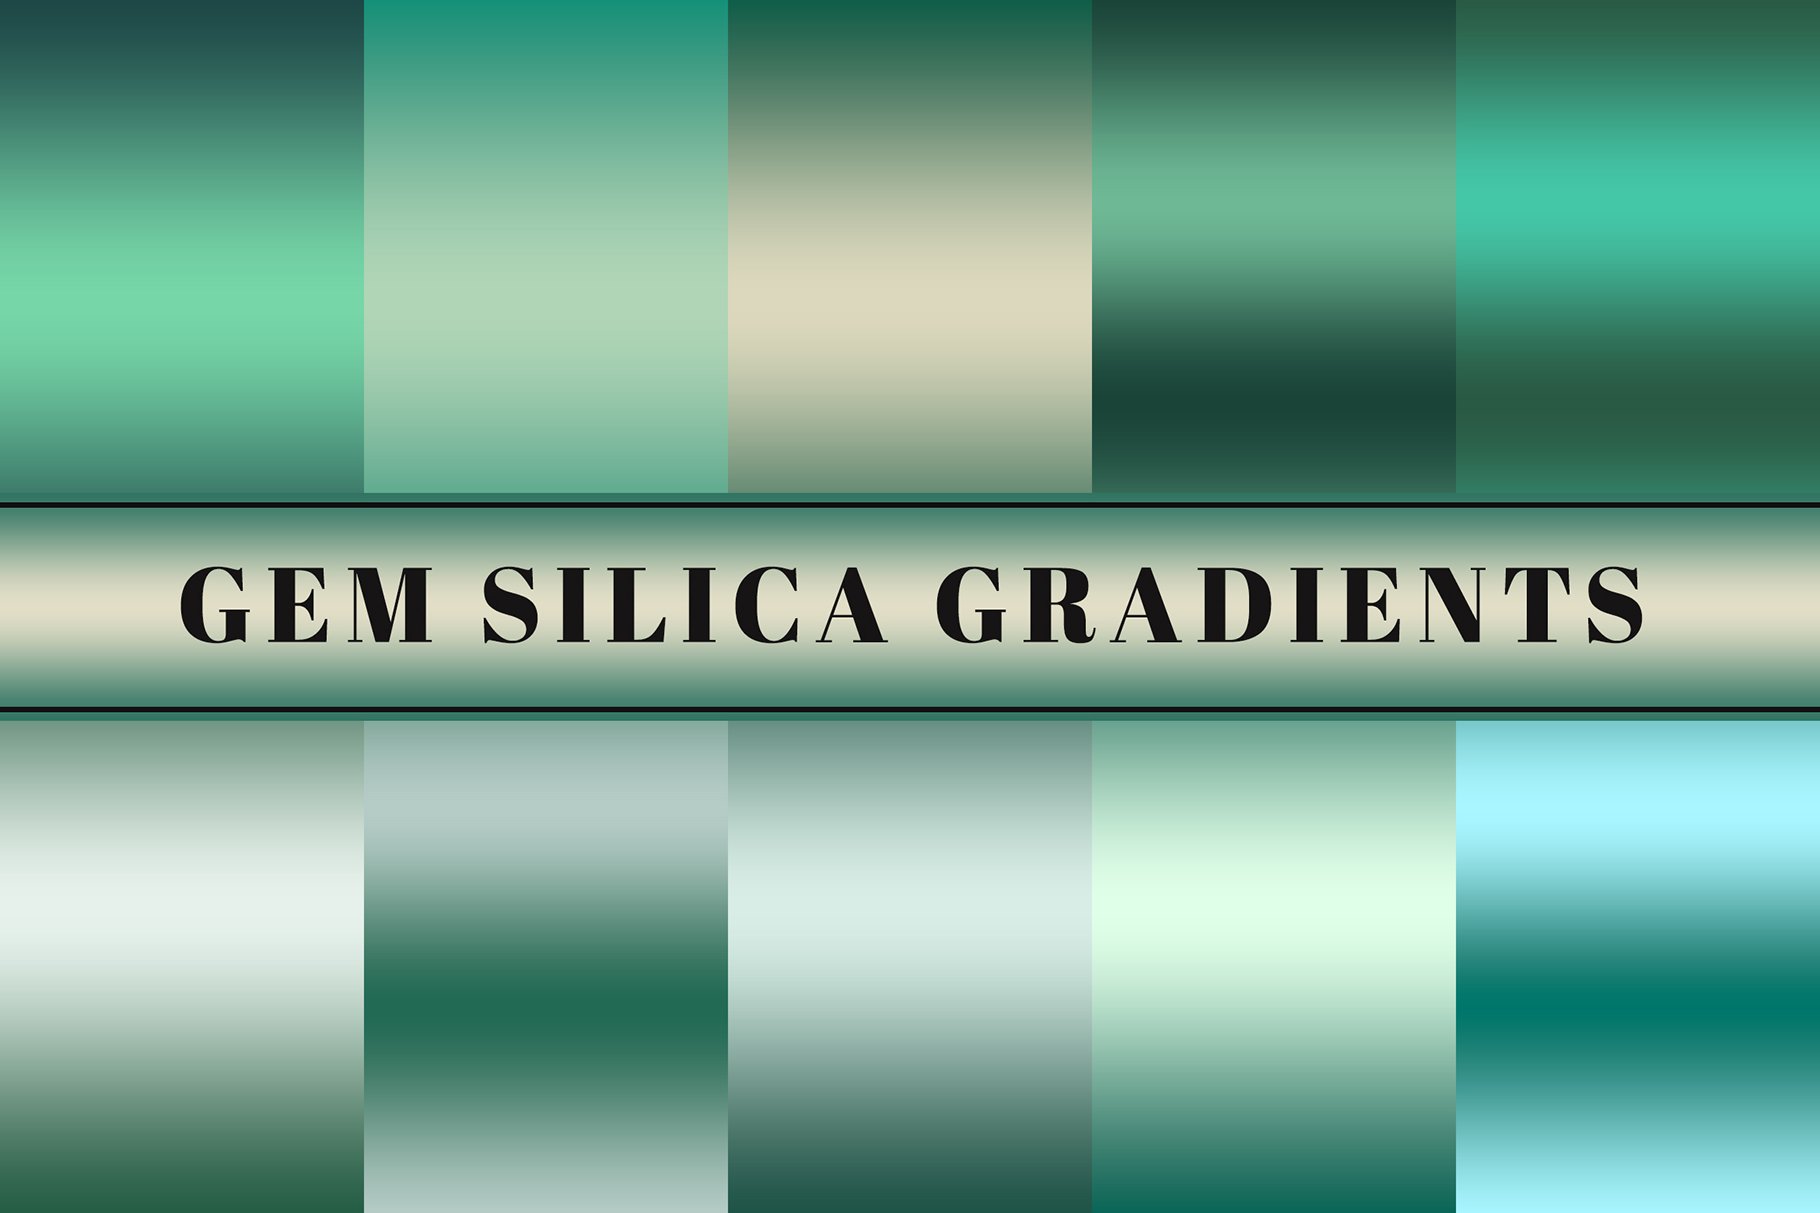 Gem Silica Gradients cover image.